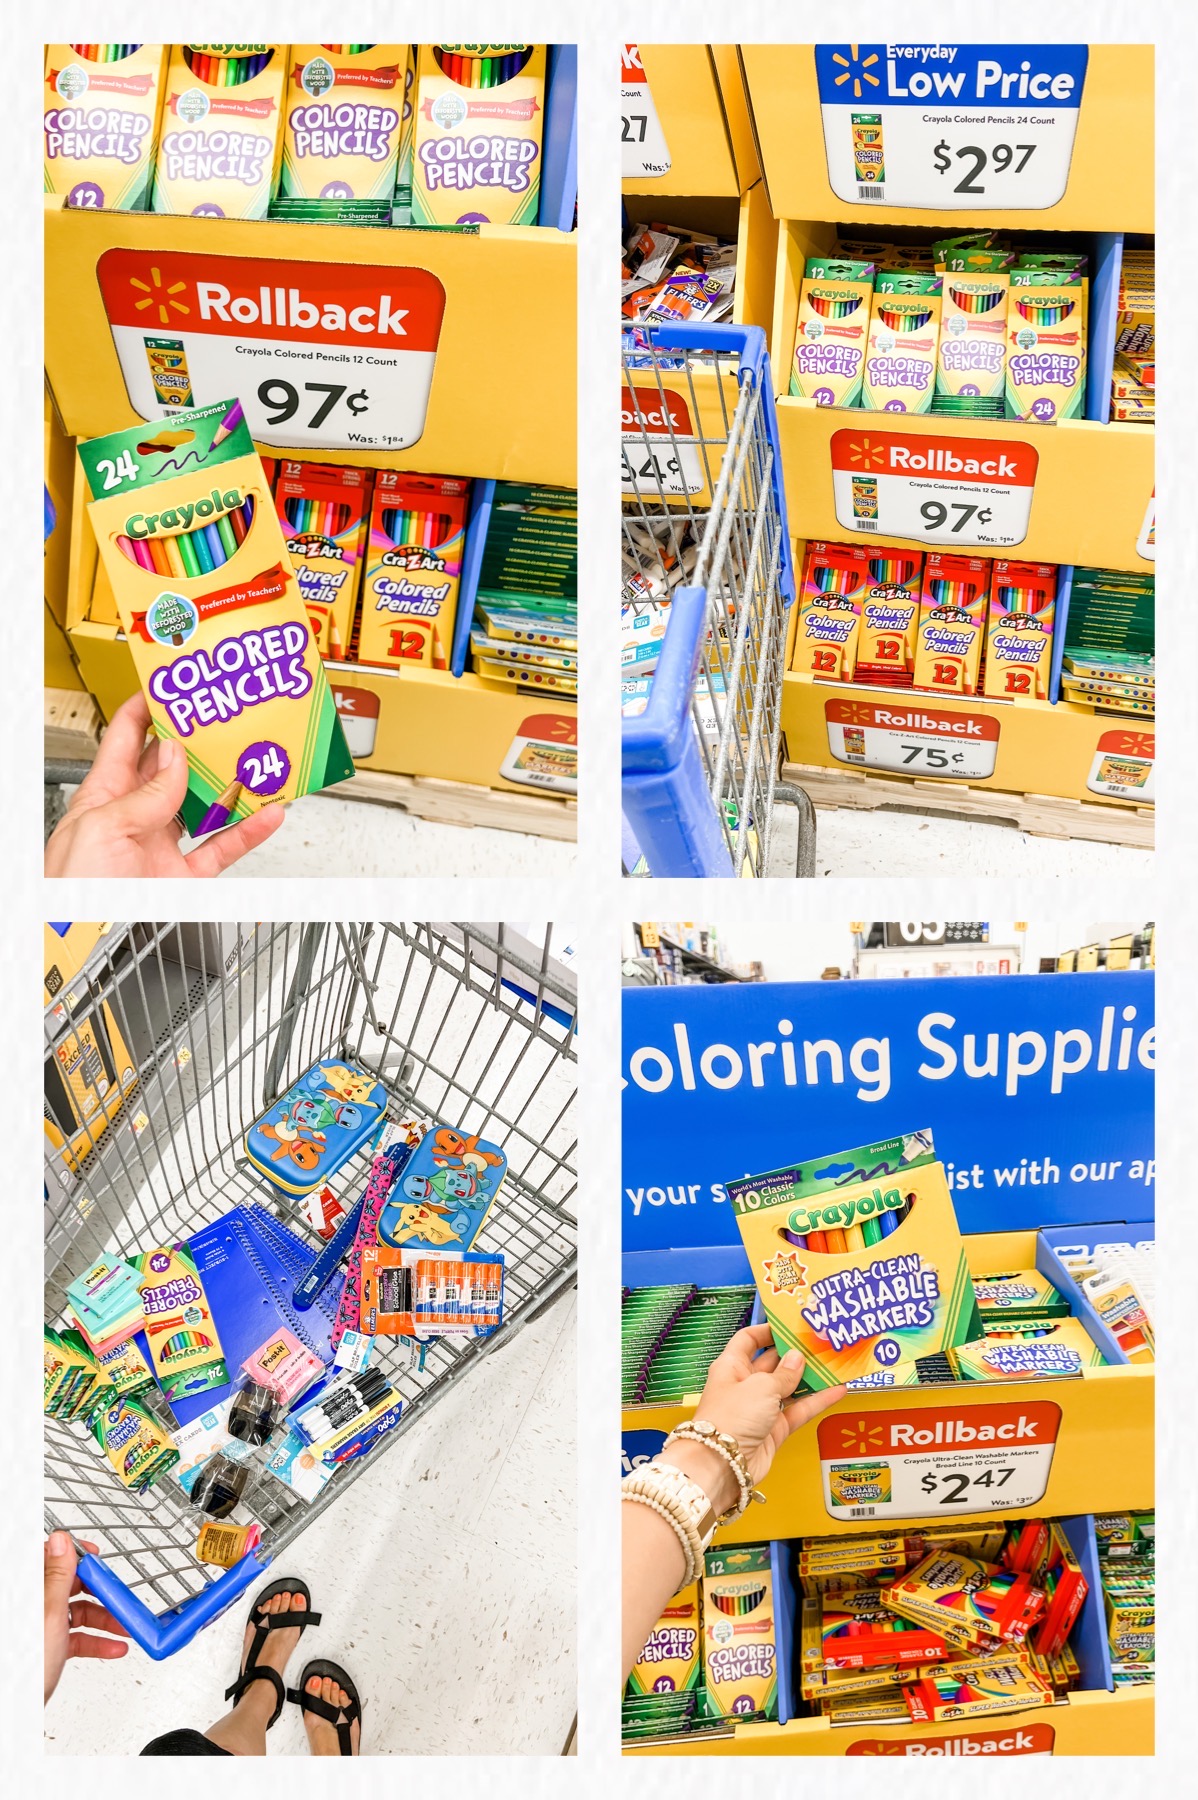 Walmart back to school supplies start at just $0.25!